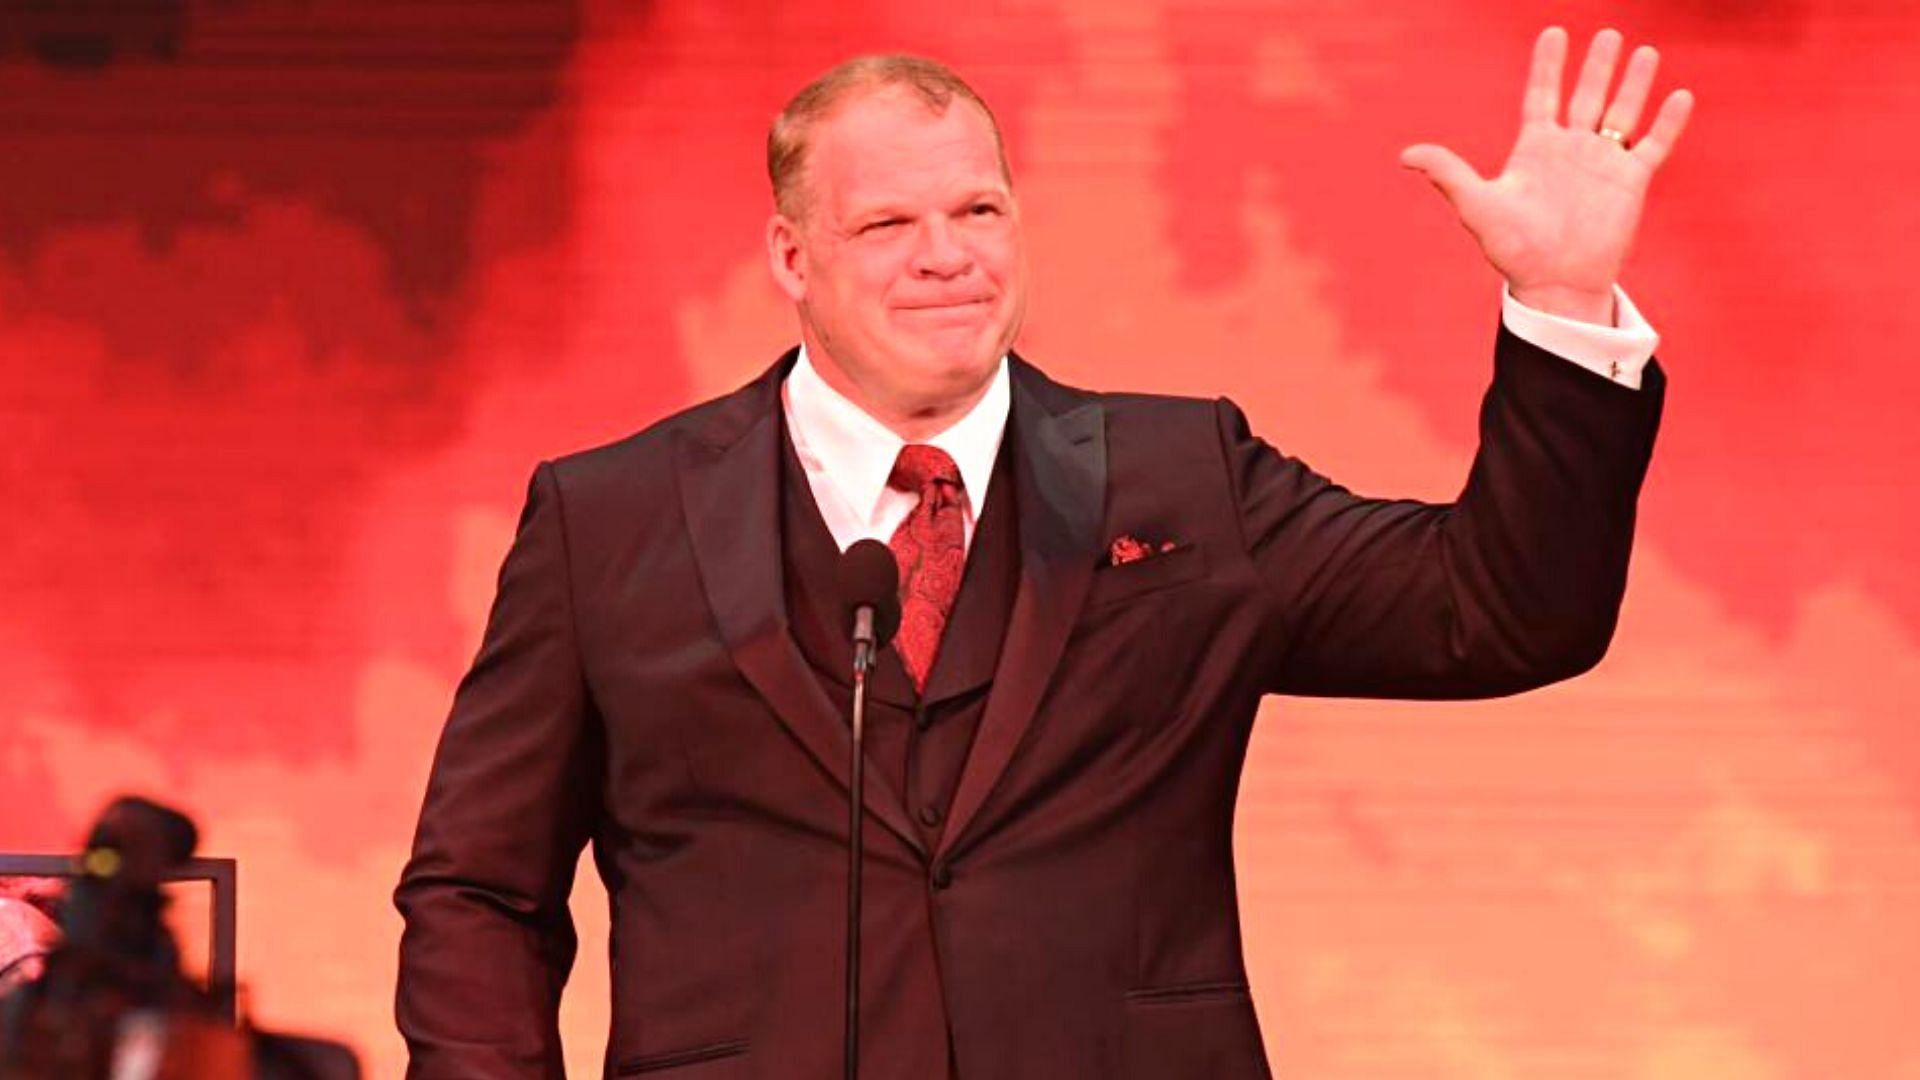 Kane, aka Glenn Jacobs, spoke highly of a fellow WWE Hall of Famer.